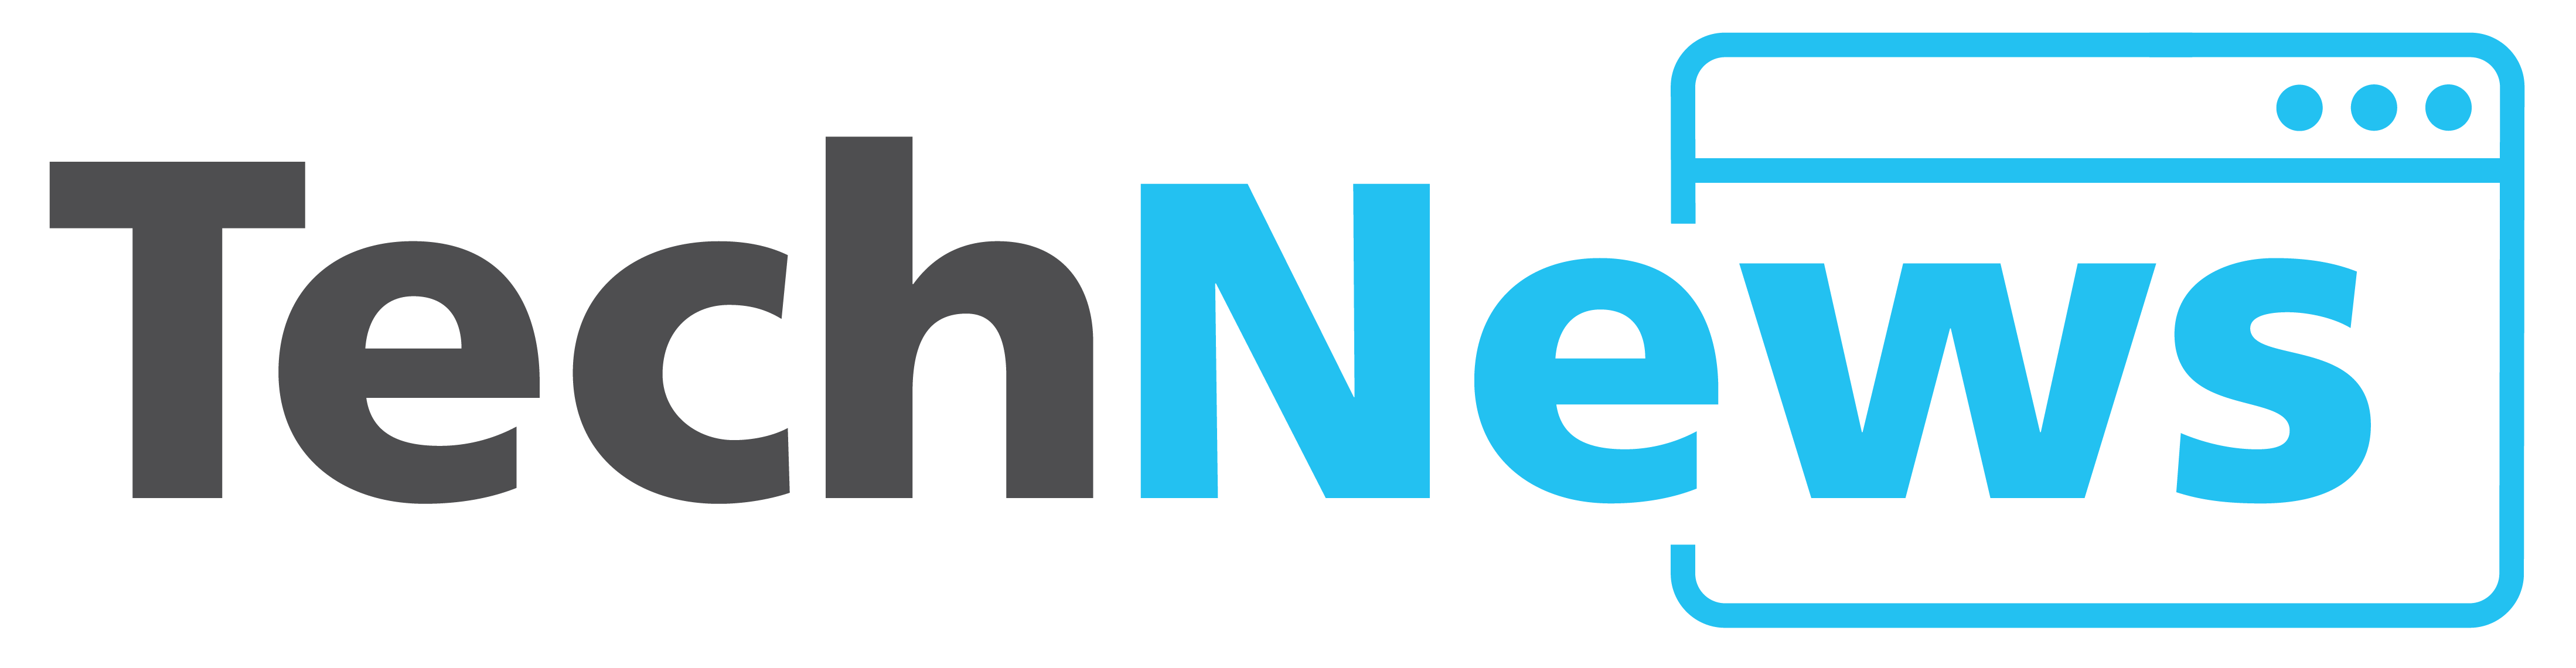 TechNews logo GovTech